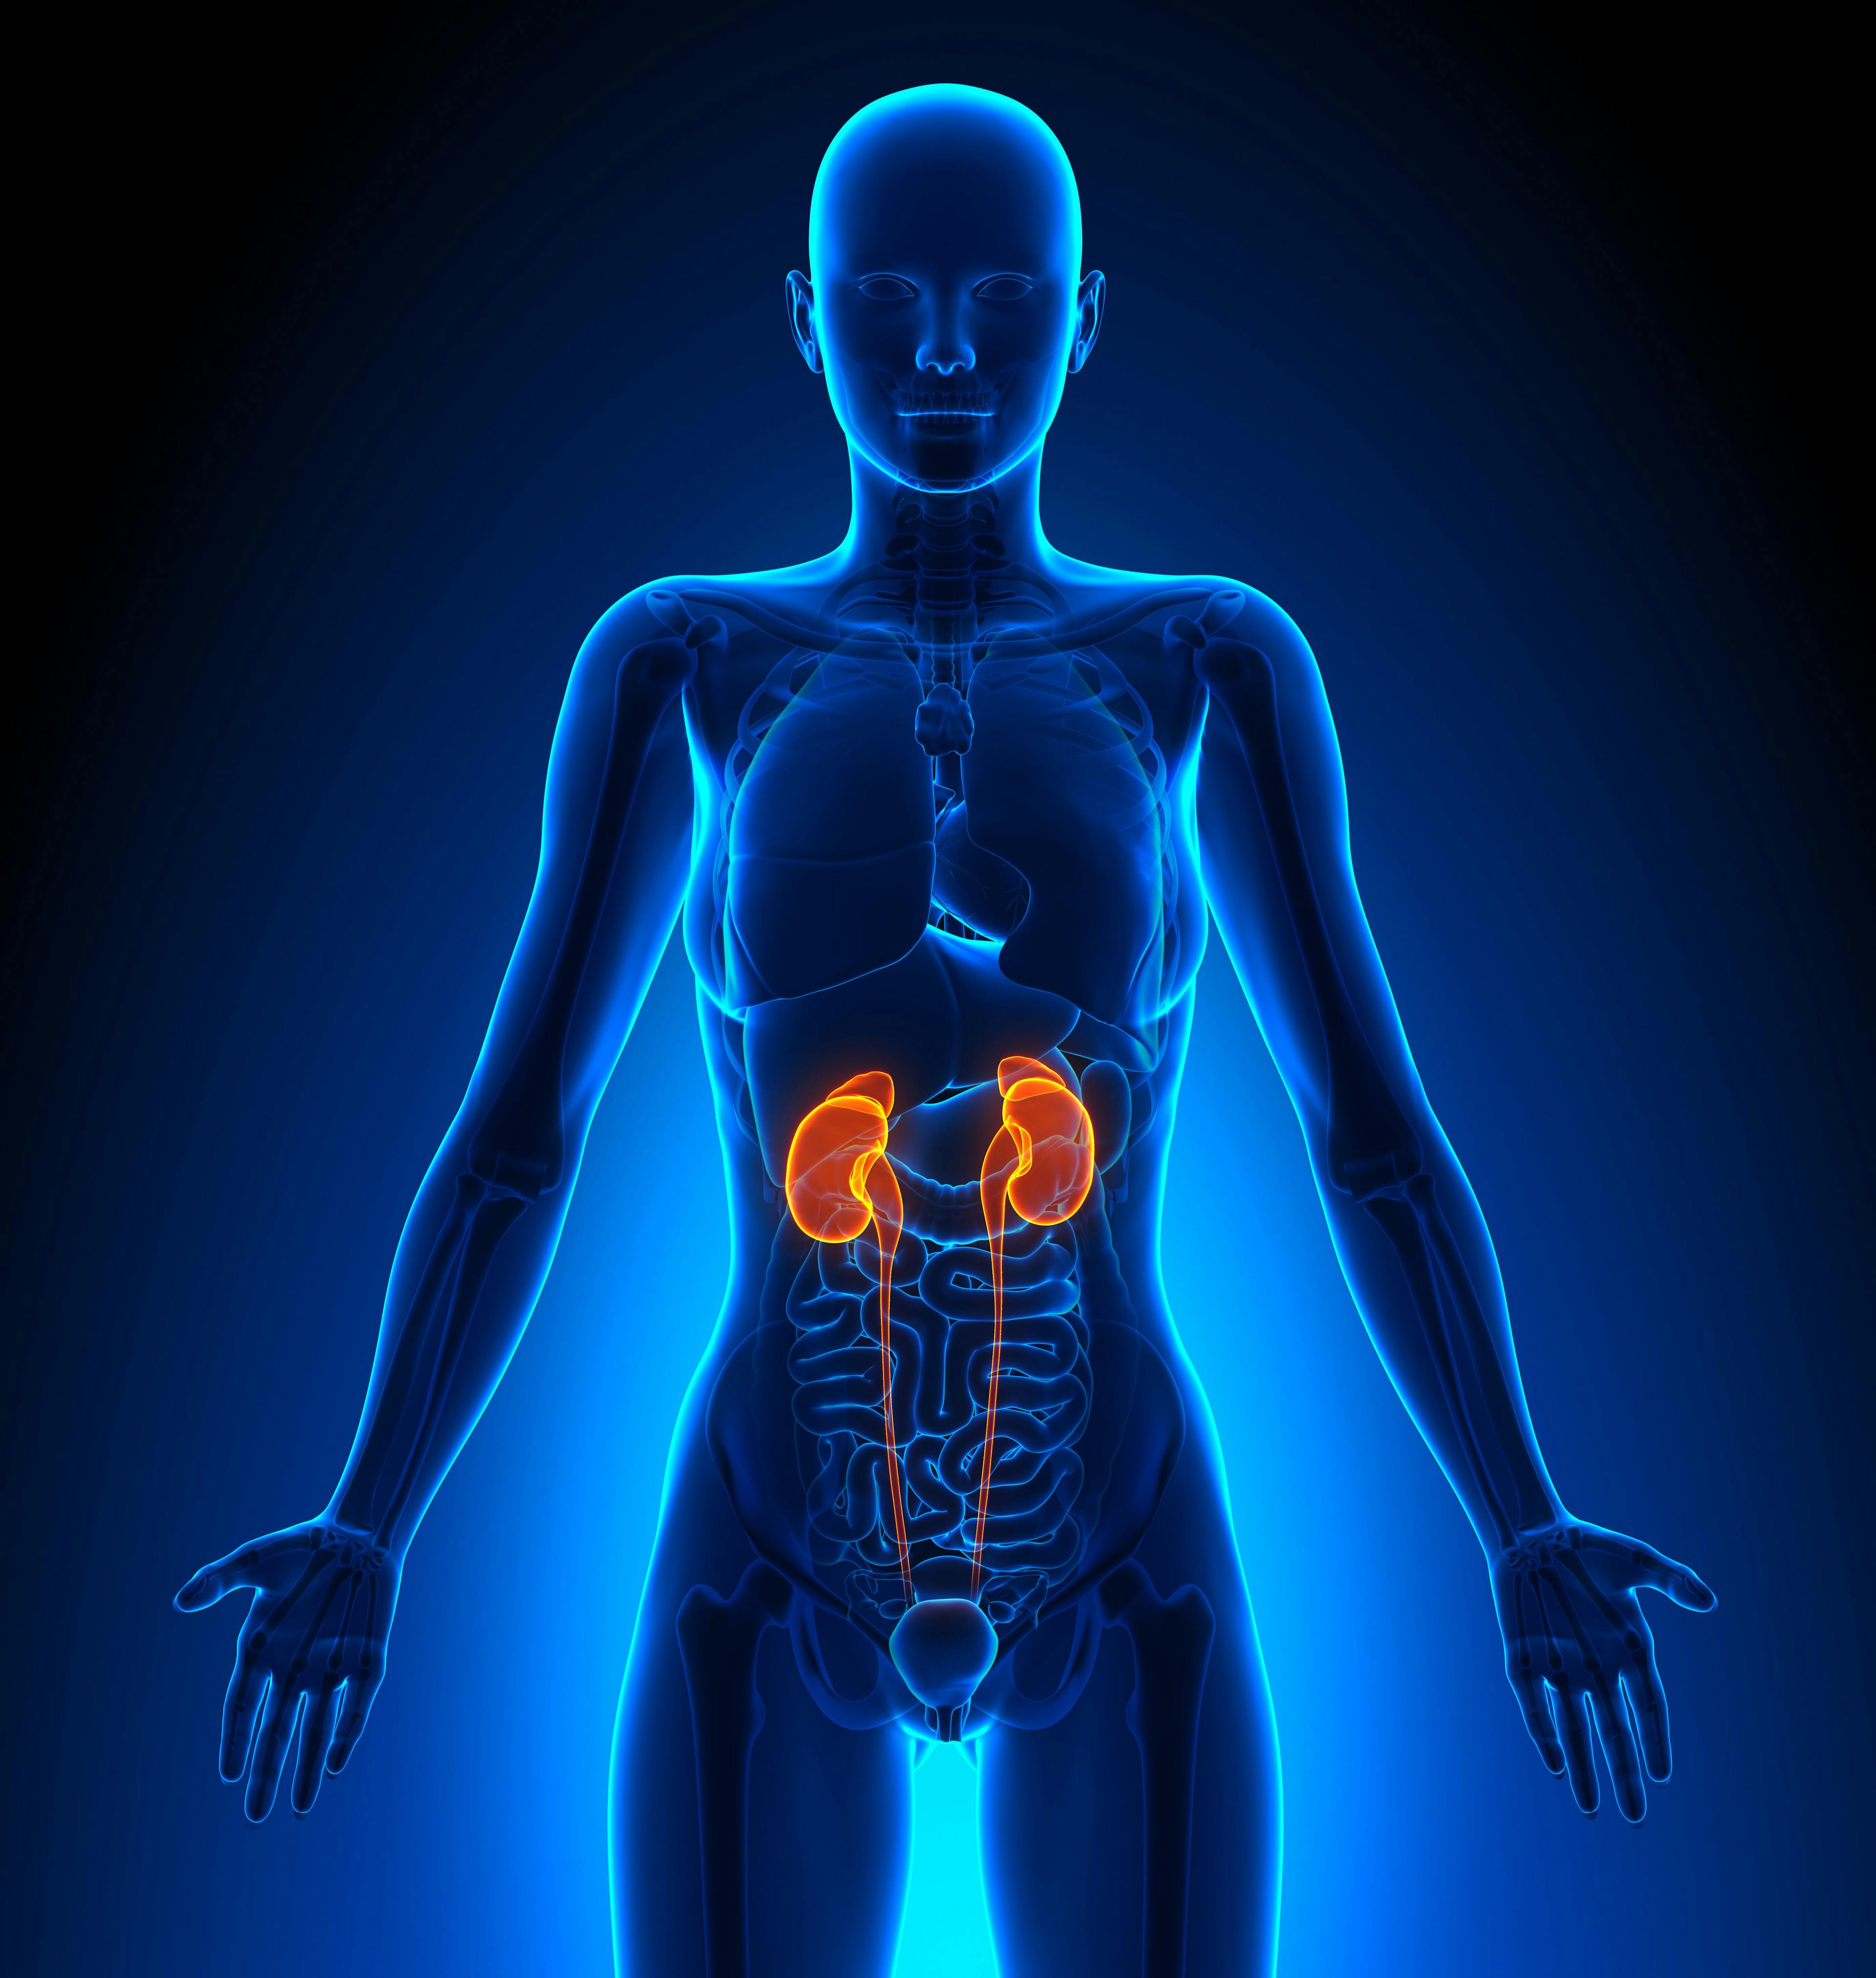 Image of human kidneys